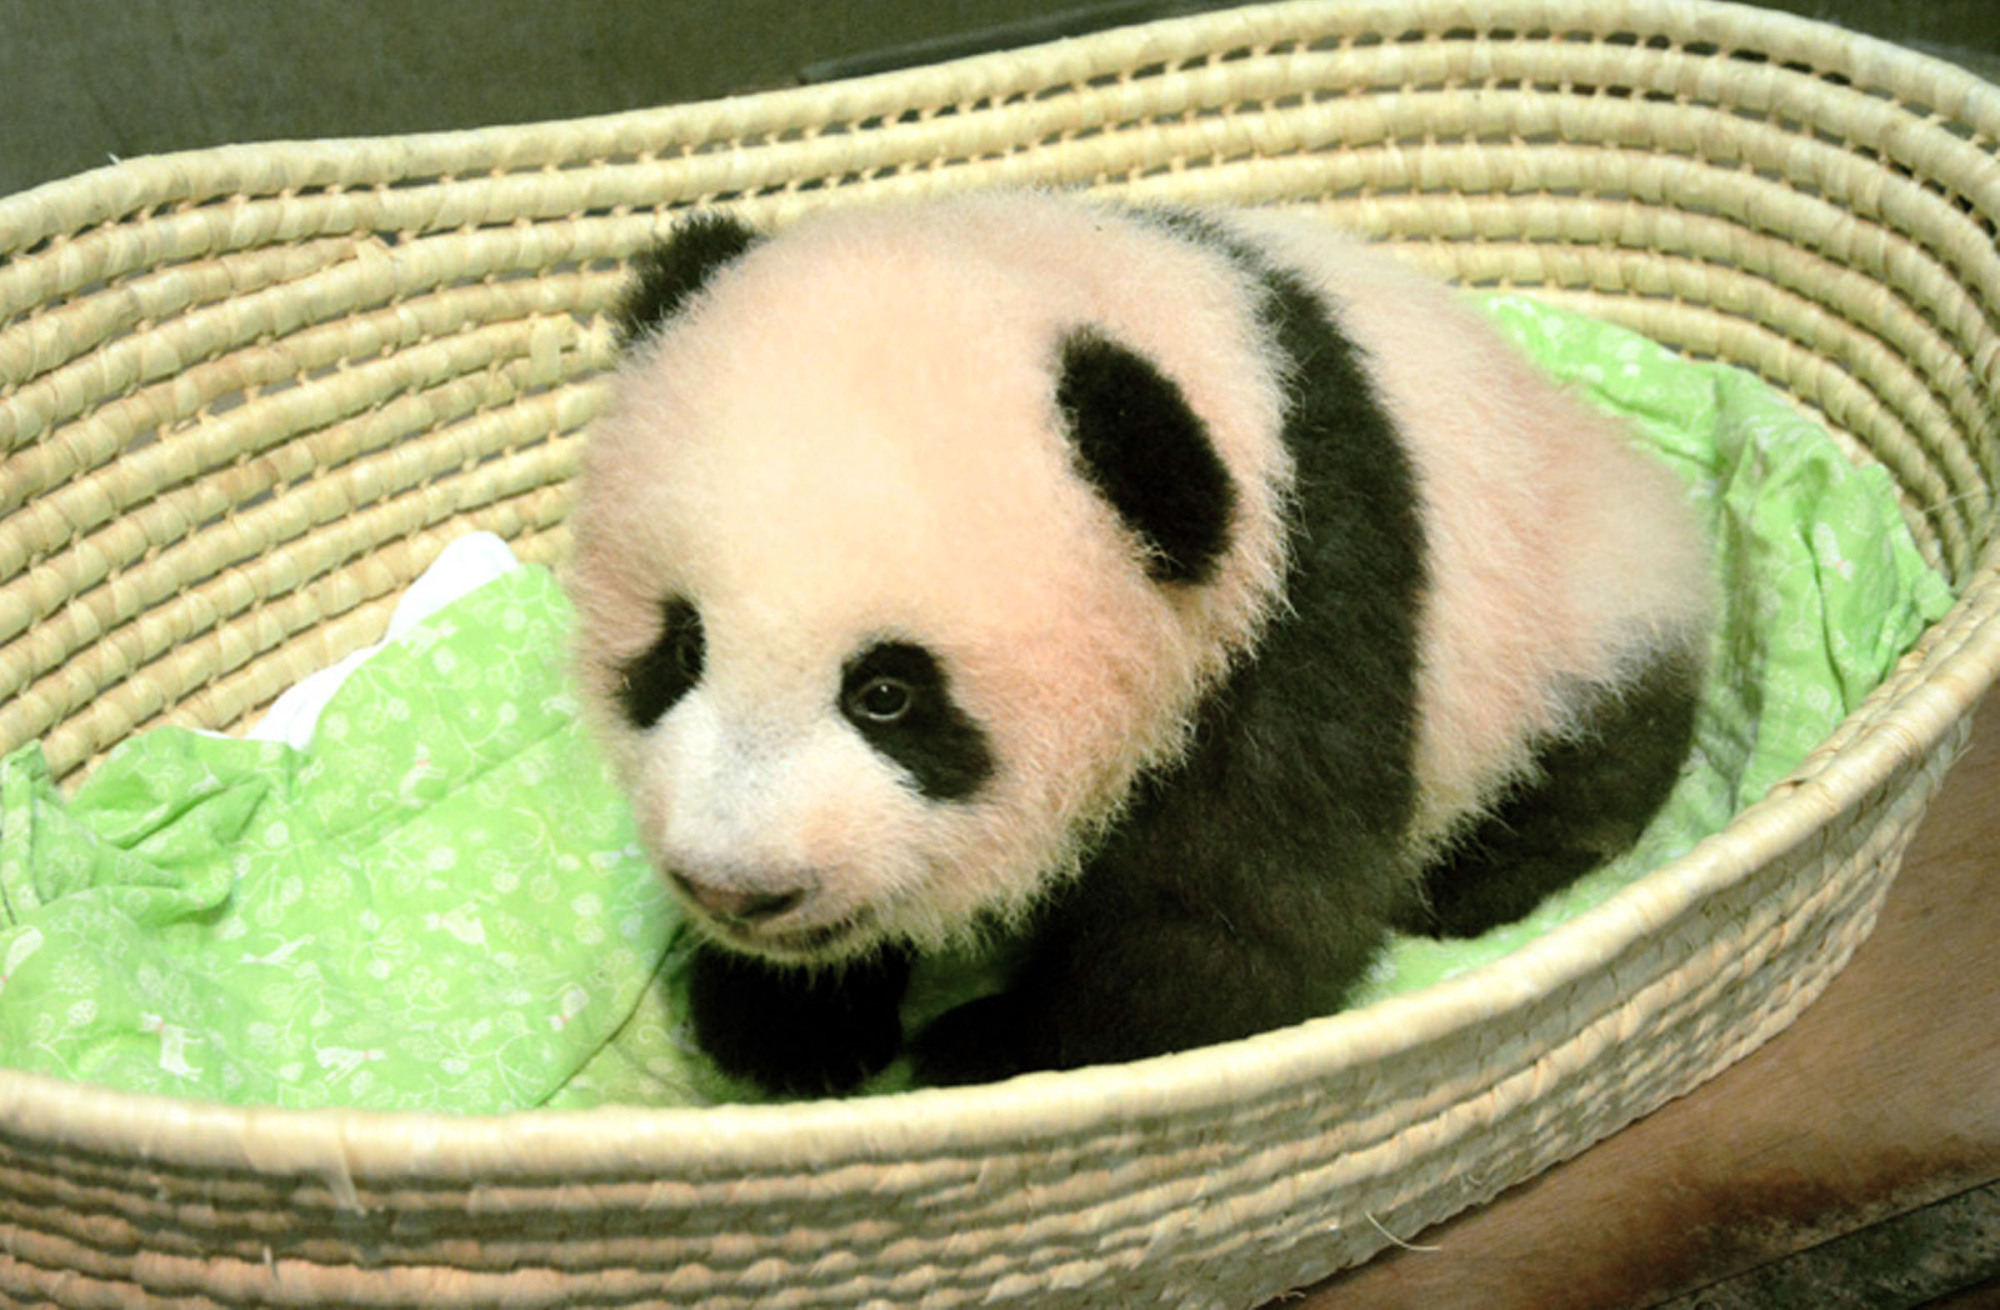 Giant panda cub born at Ueno zoo named Xiang Xiang | The Japan Times